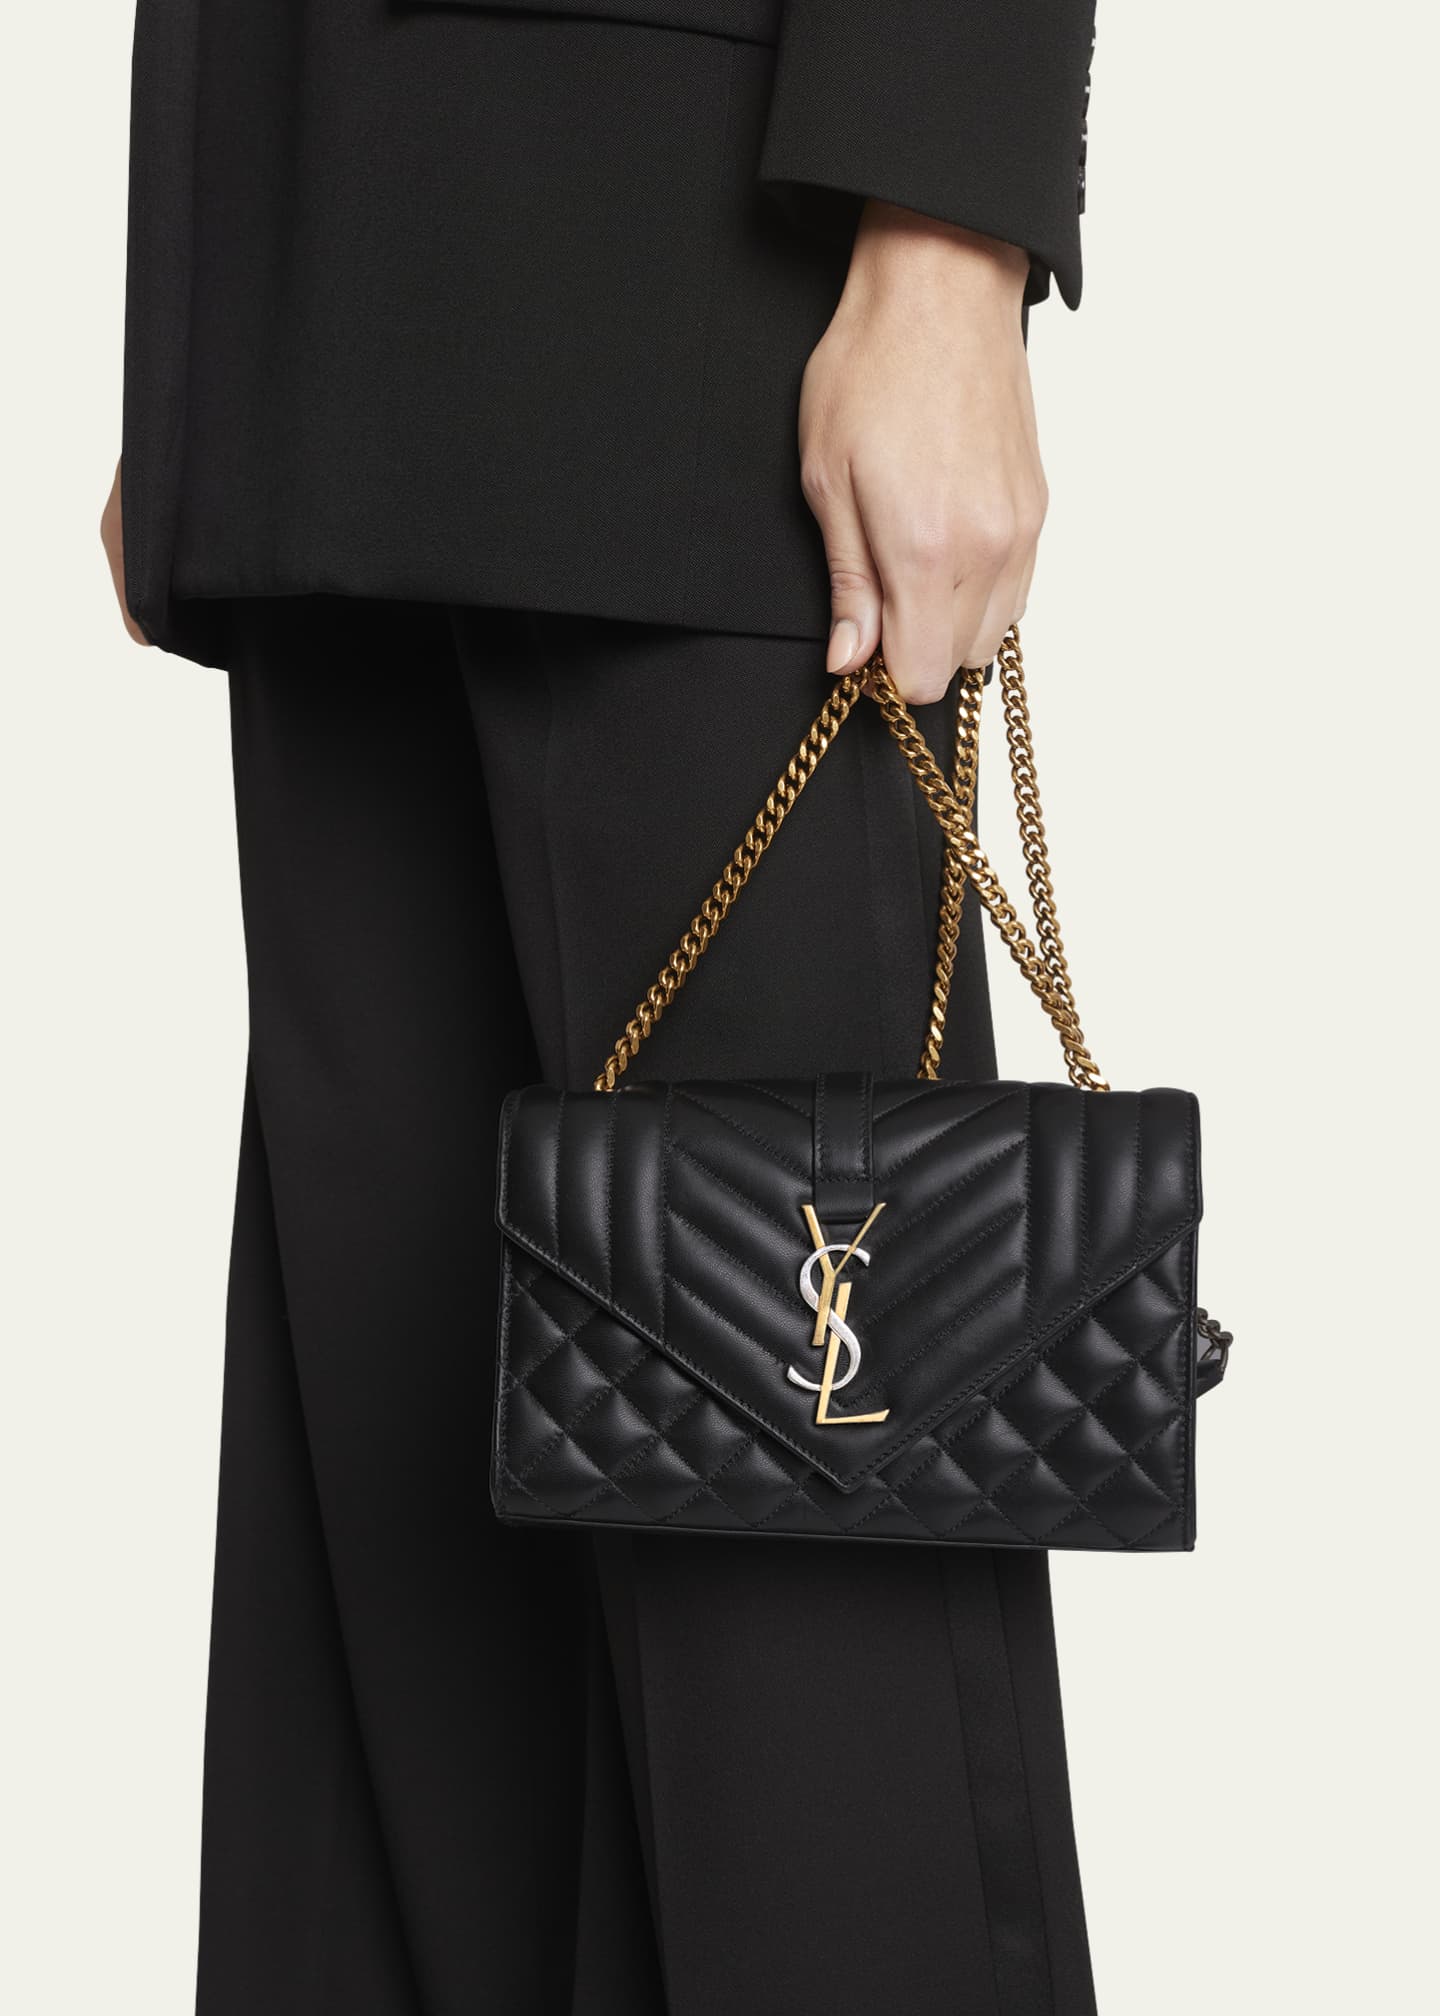 Ysl envelope monogram wallet on chain : r/handbags